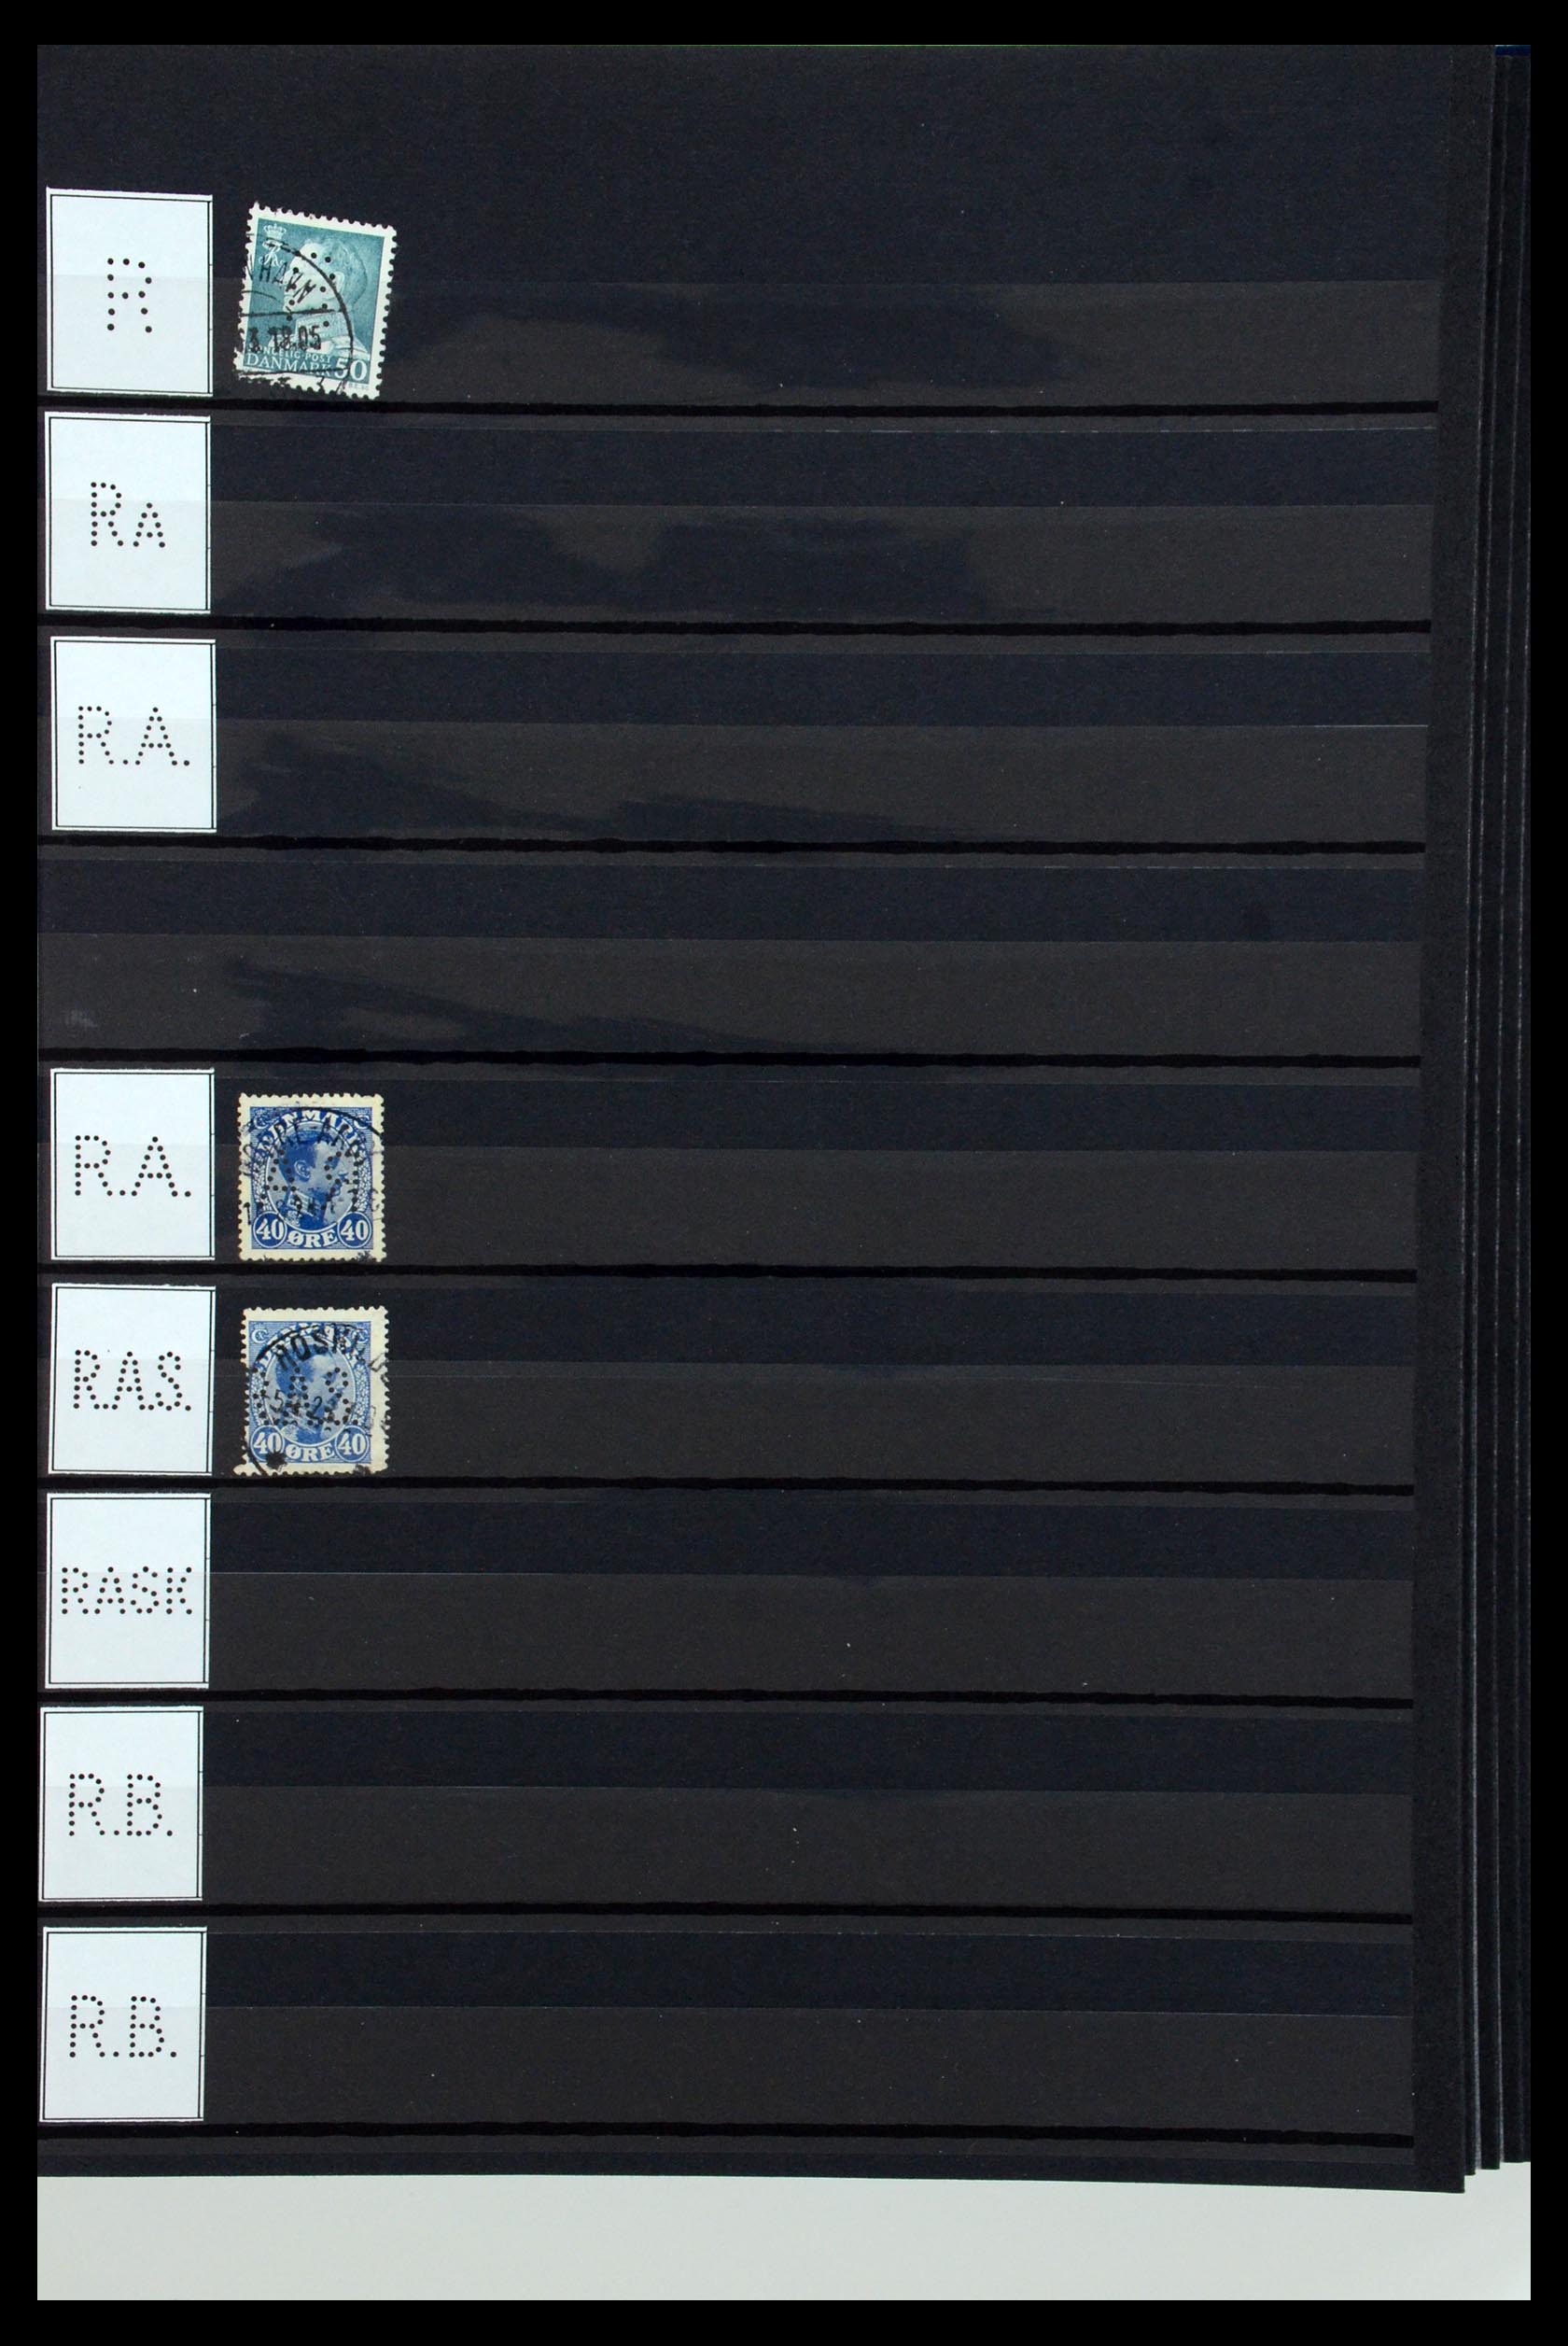 36396 198 - Stamp collection 36396 Denmark perfins.